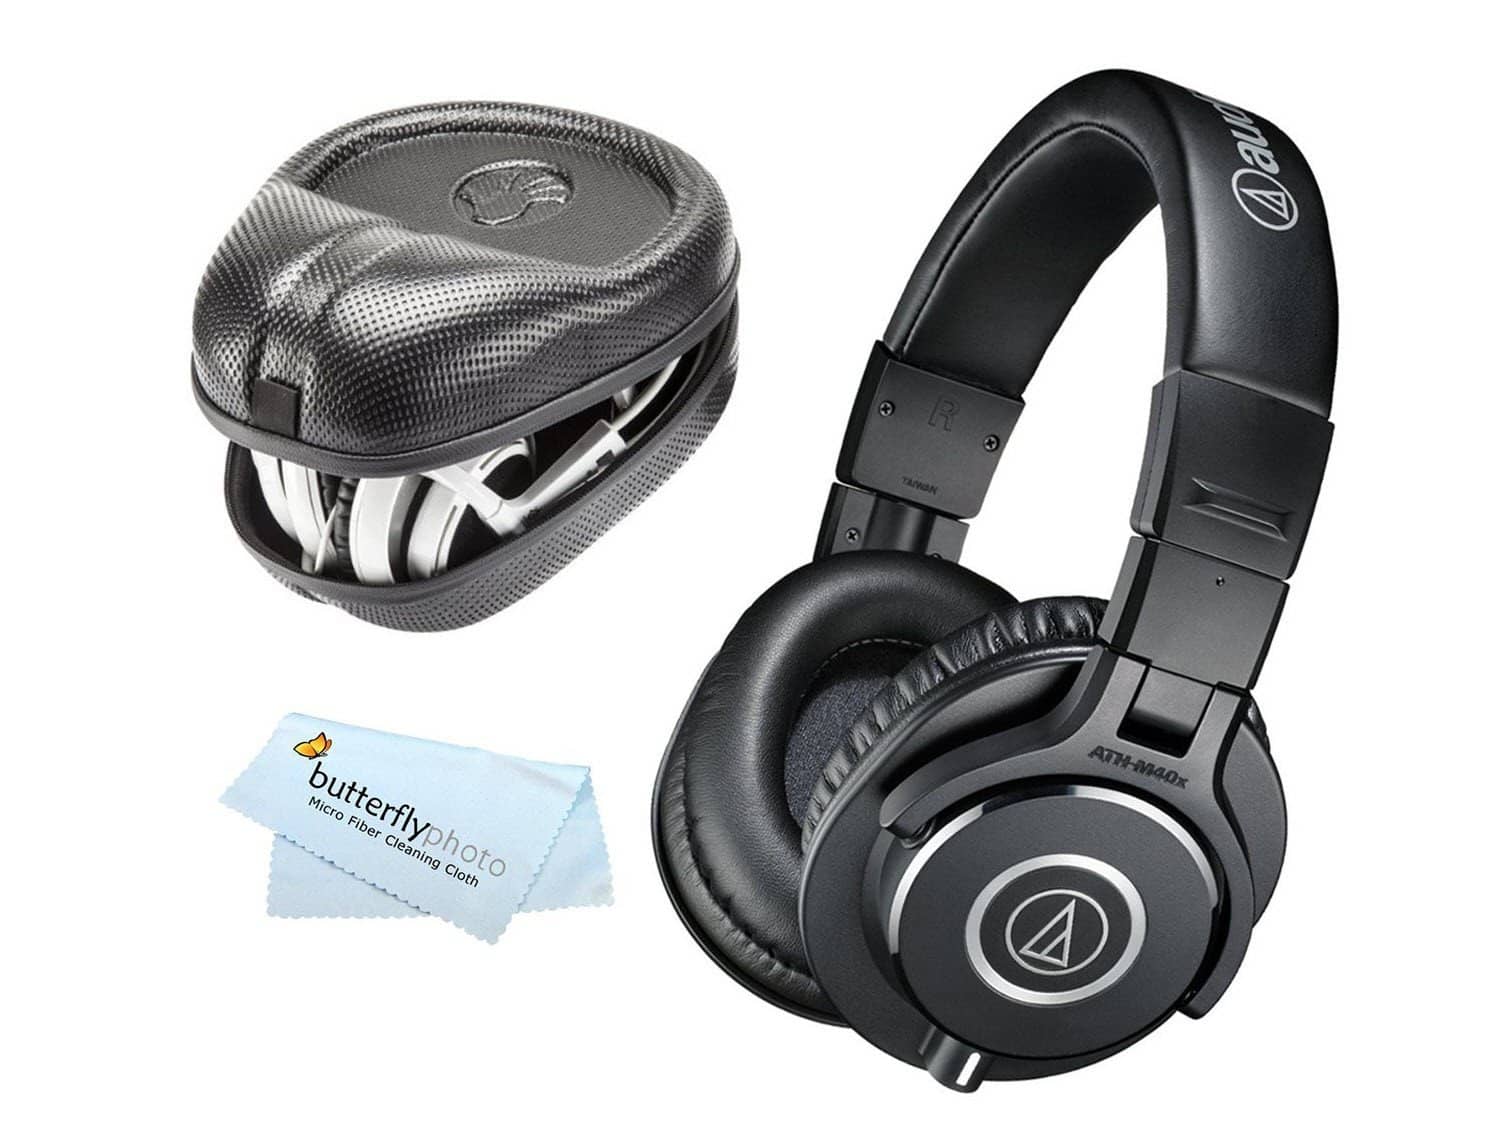 Audio-Technica ATH-M40x Professional Studio Monitor Headphones Case